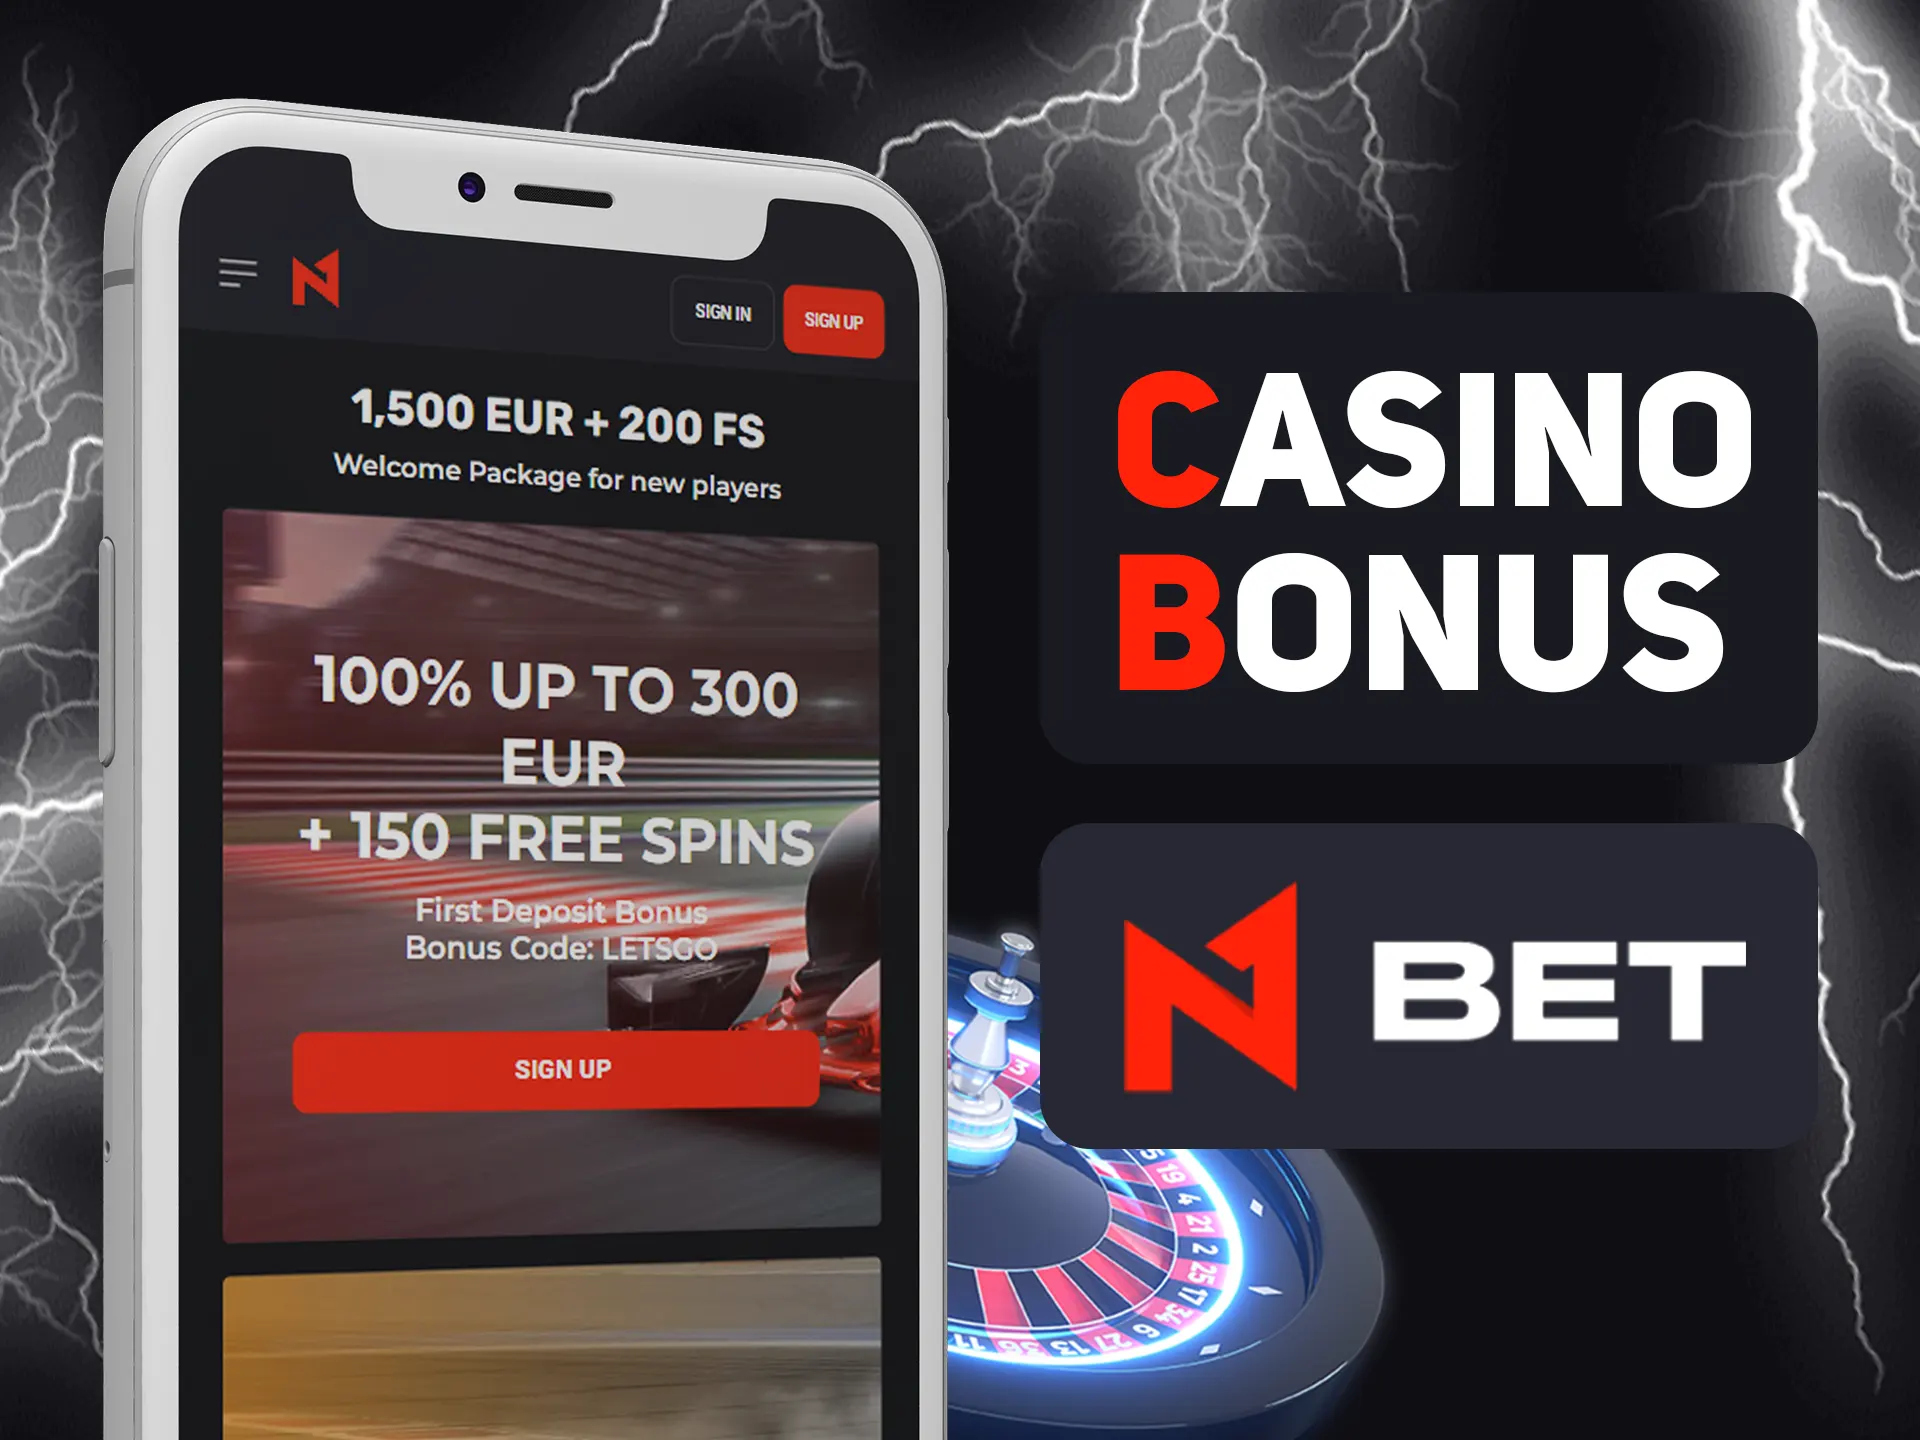 Get casino bonus by playing it at N1bet.